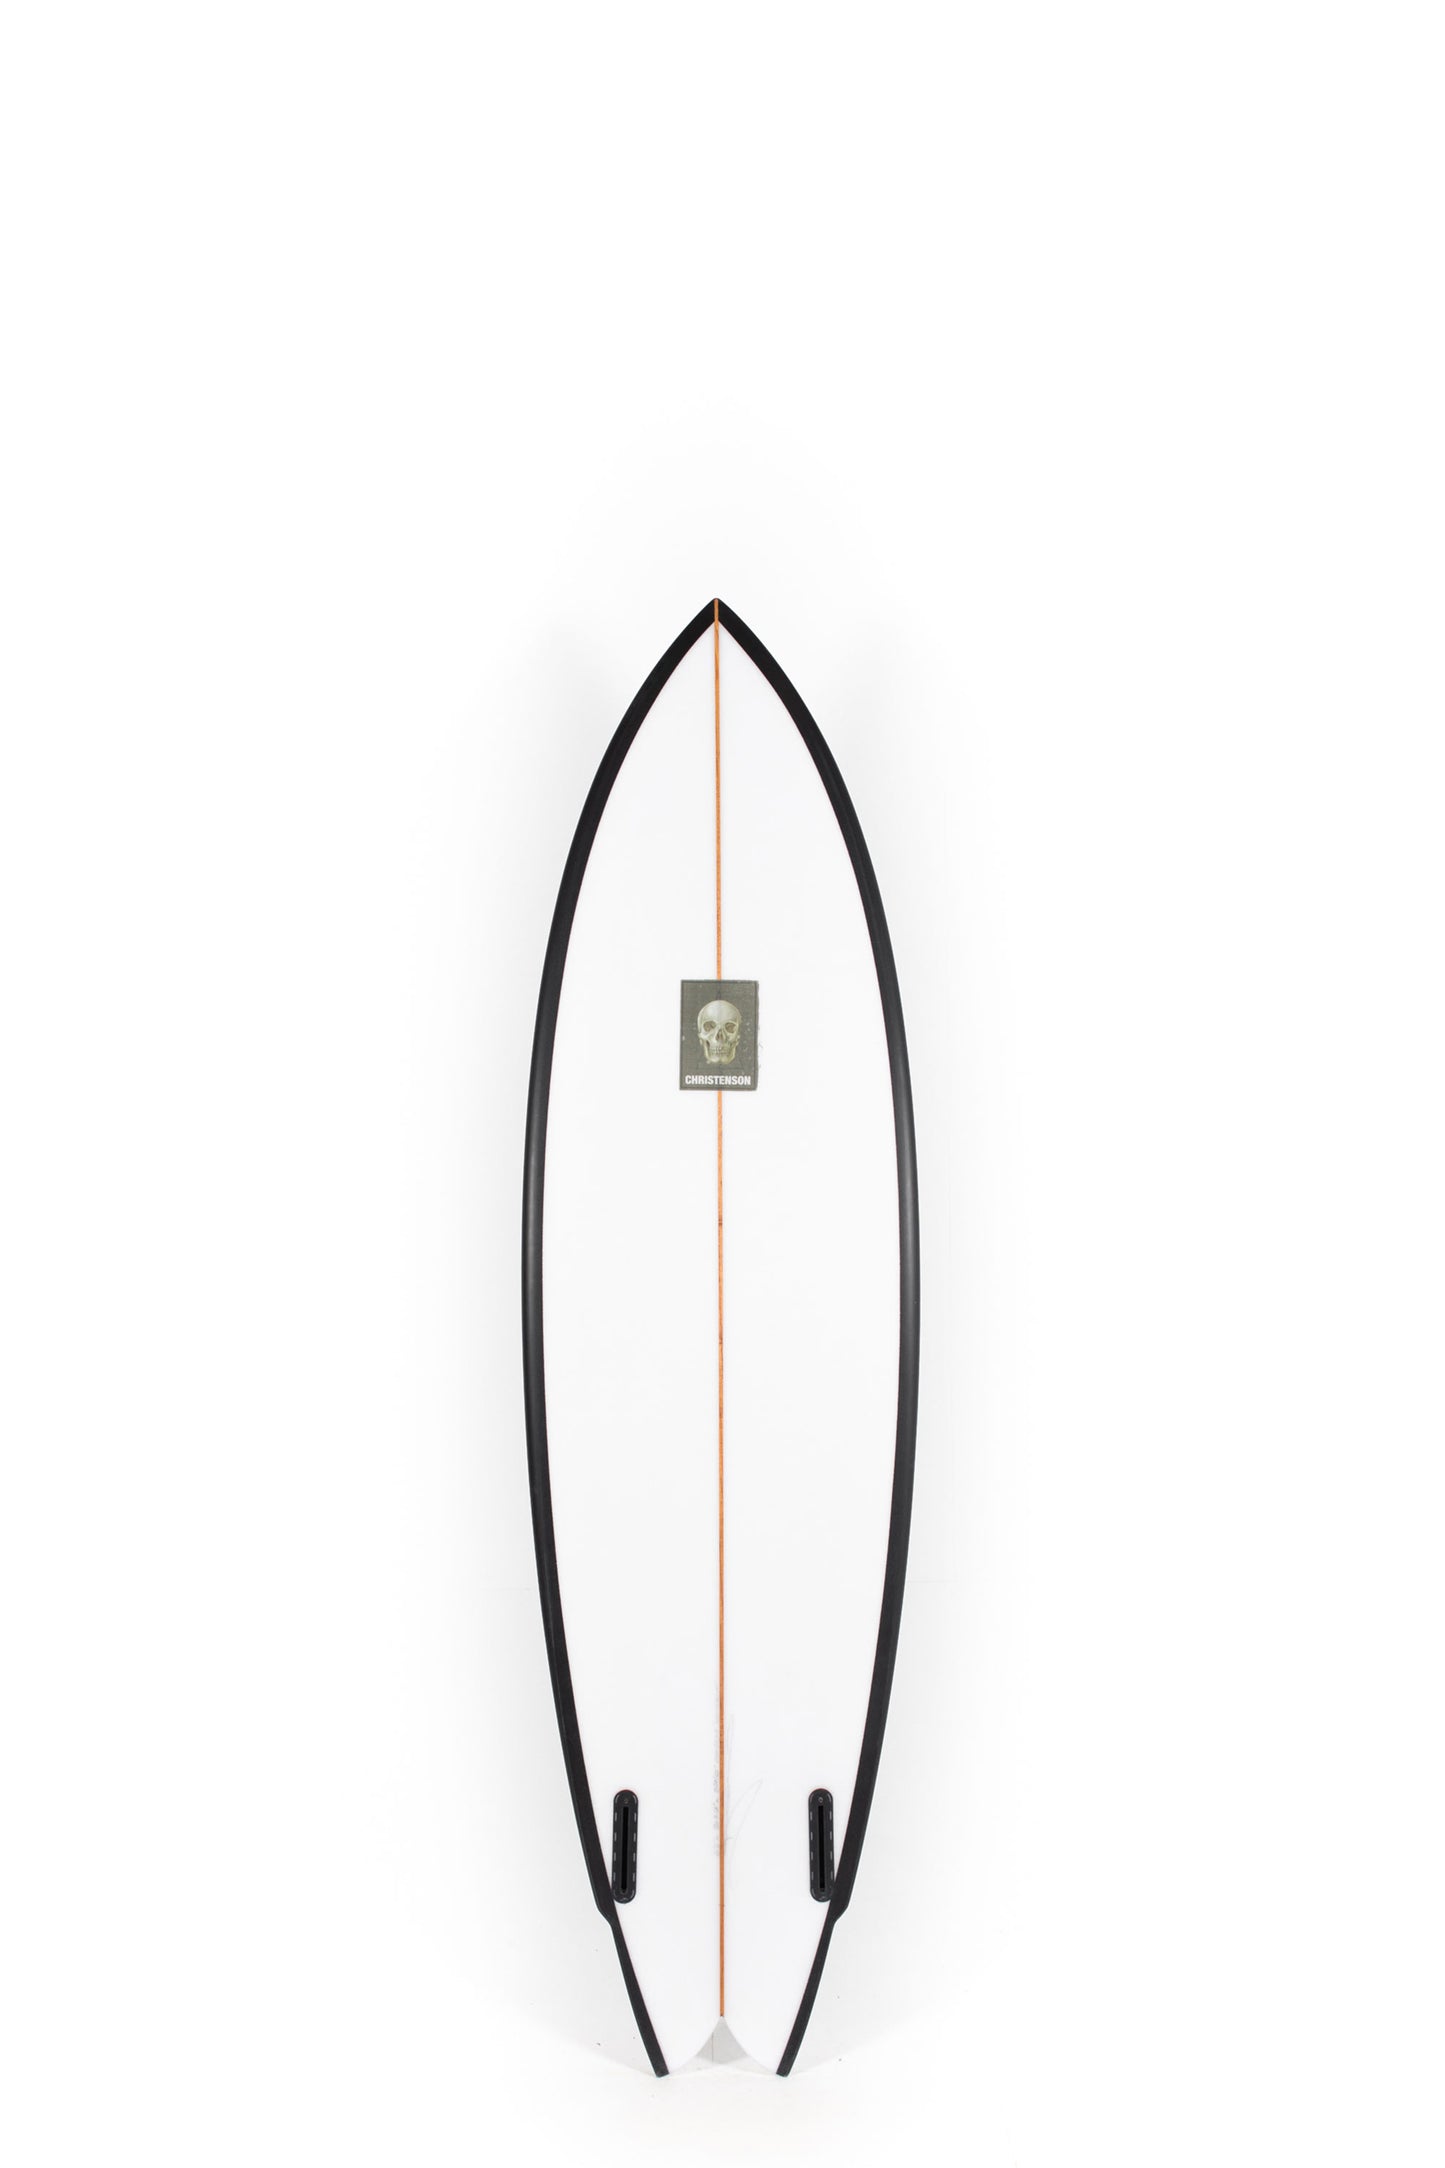 Pukas Surf Shop - Christenson Surfboard  - WOLVERINE by Chris Christenson - 6’6 x 20 3/4 x 2 5/8 - CX05334